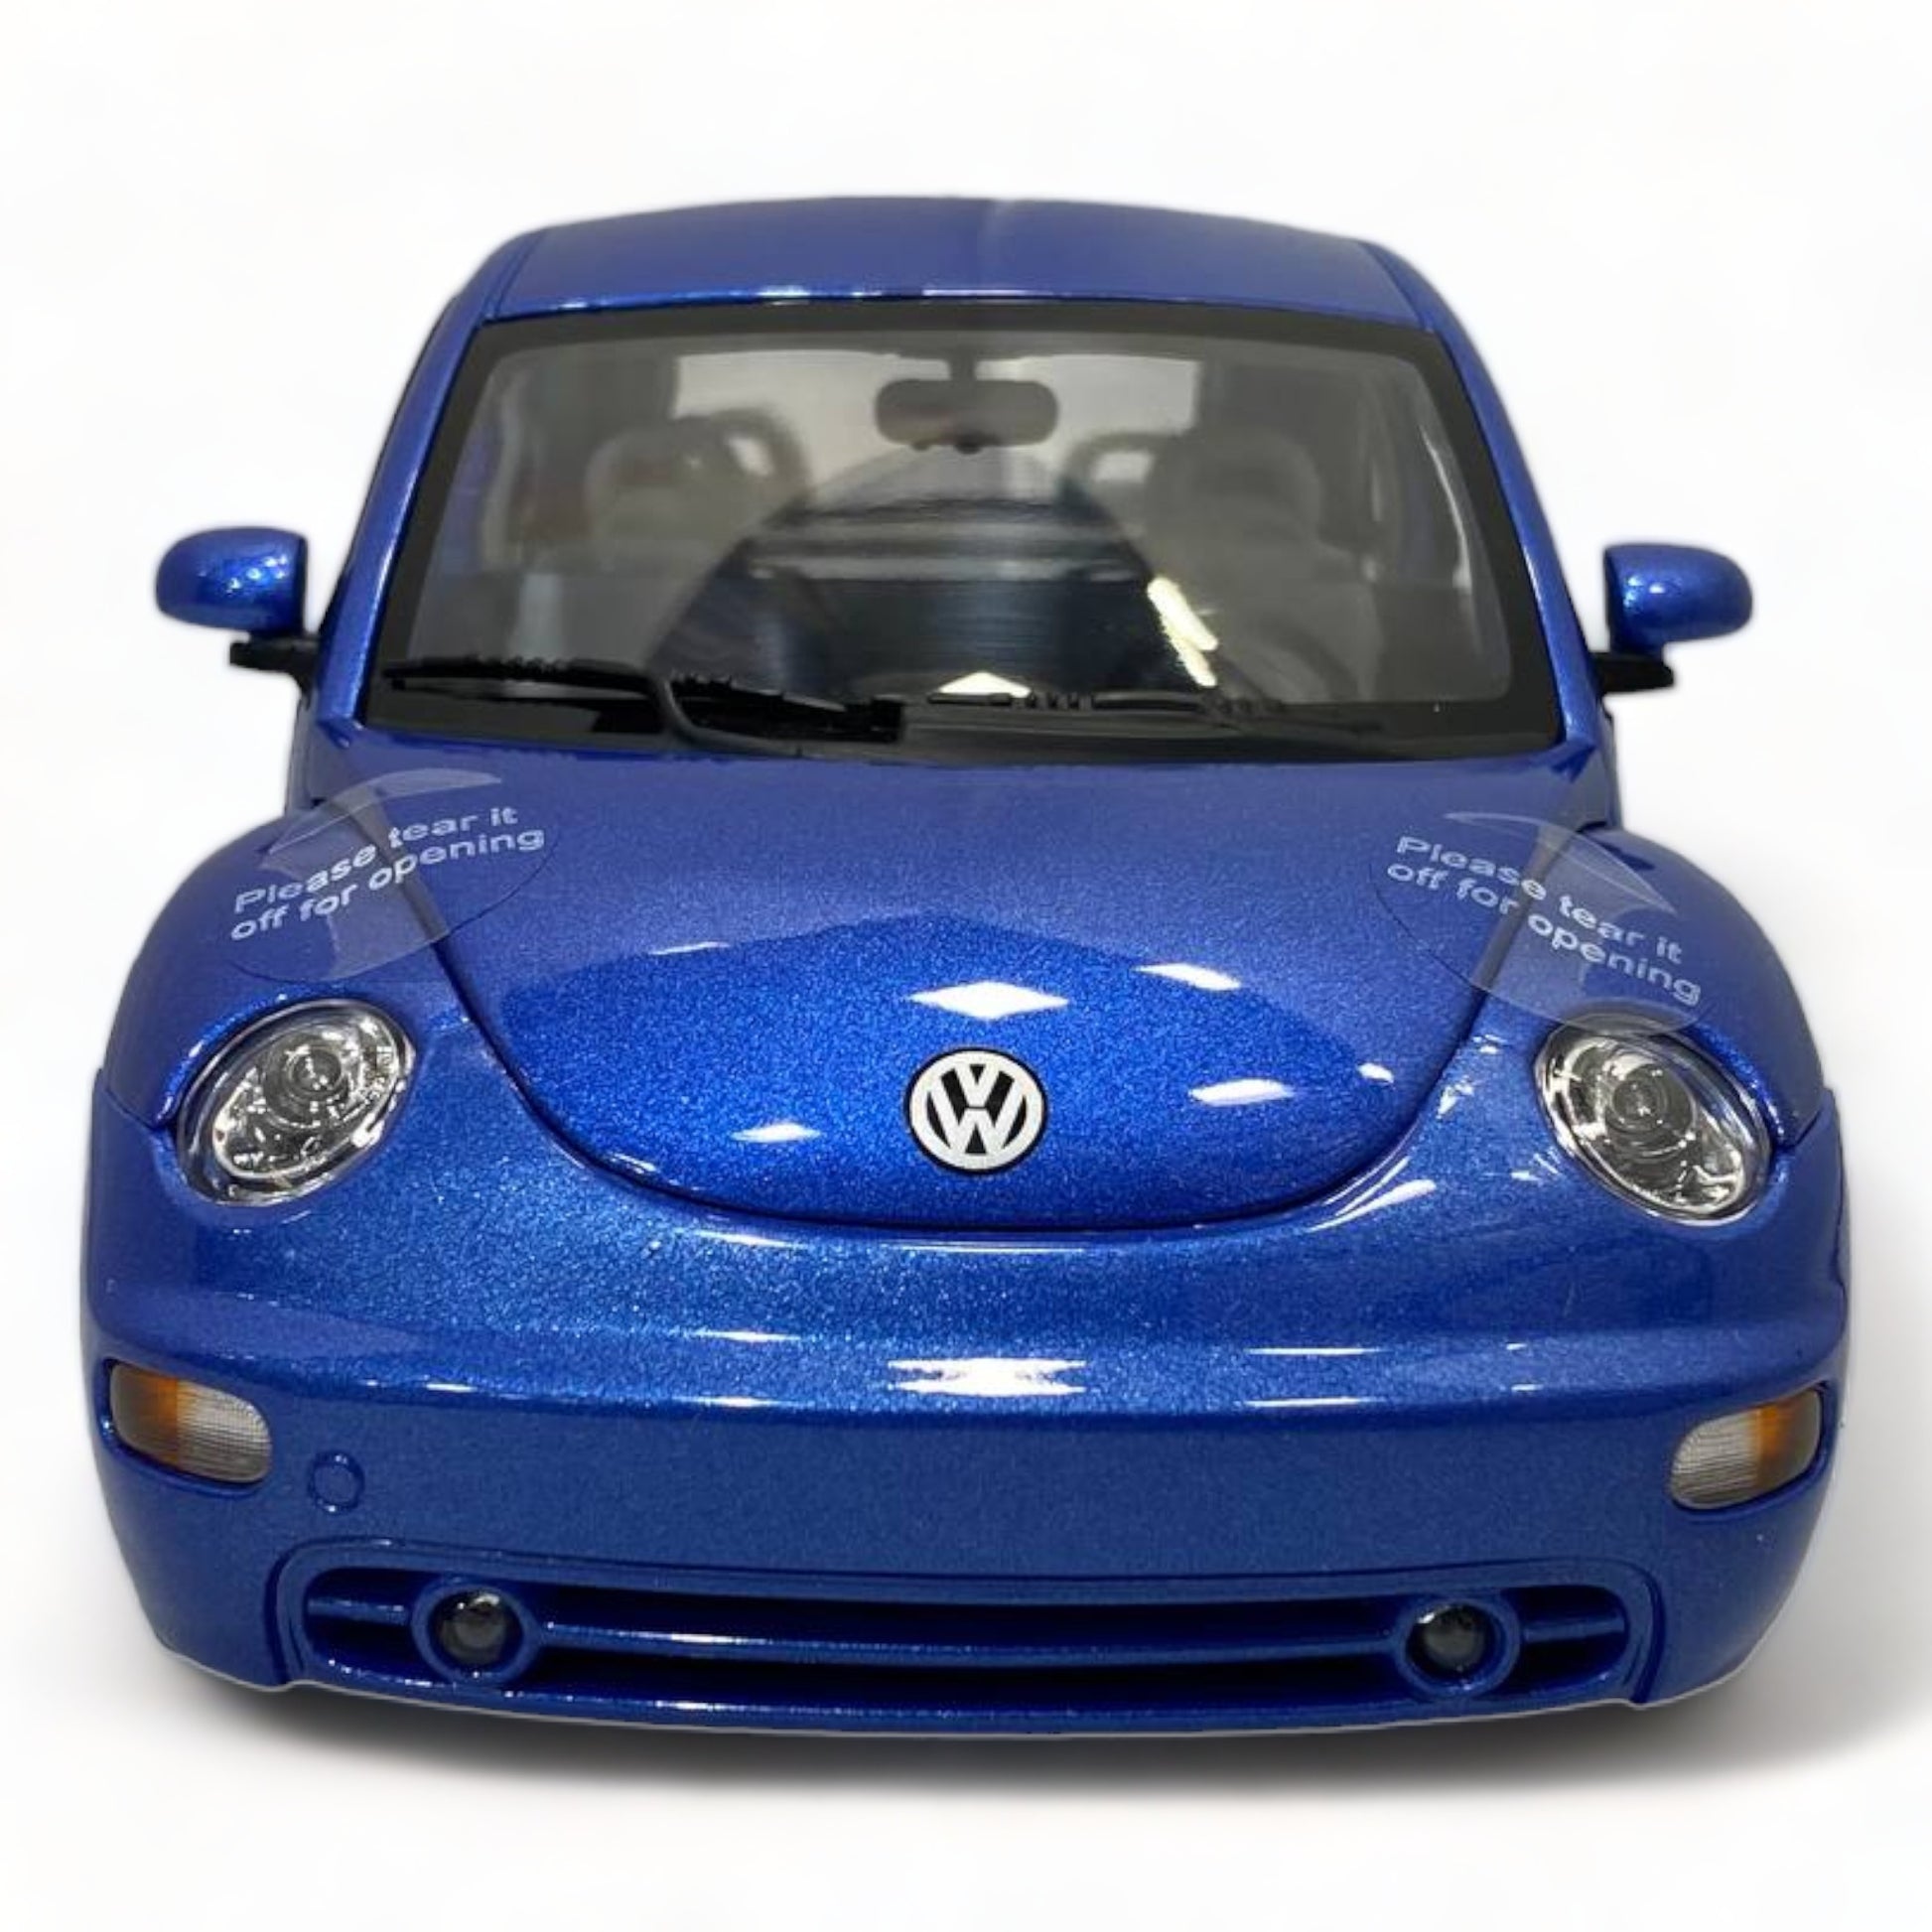 1/18 GATE G Volkswagen BEETLE COUPE BLUE Model Car|Sold in Dturman.com Dubai UAE.